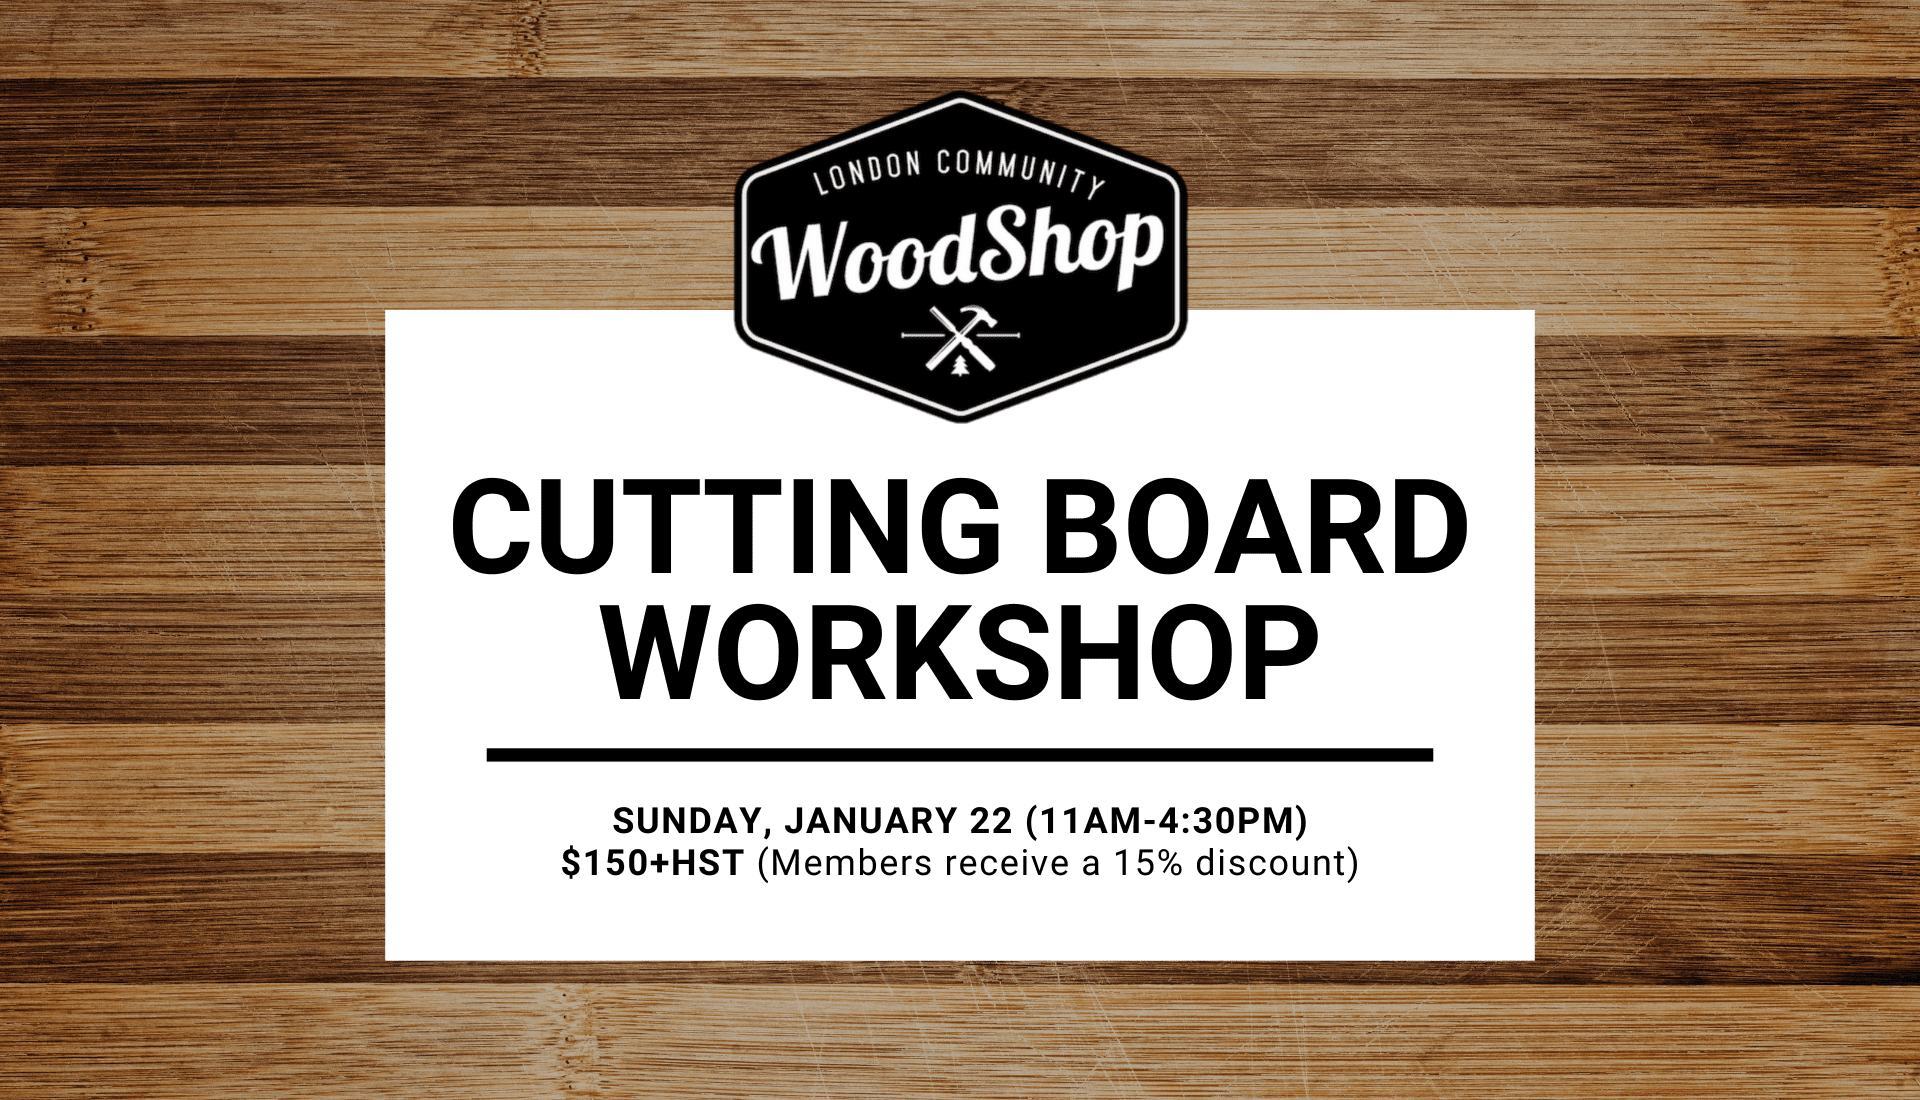 Cutting Board Workshop - Sunday, January 22